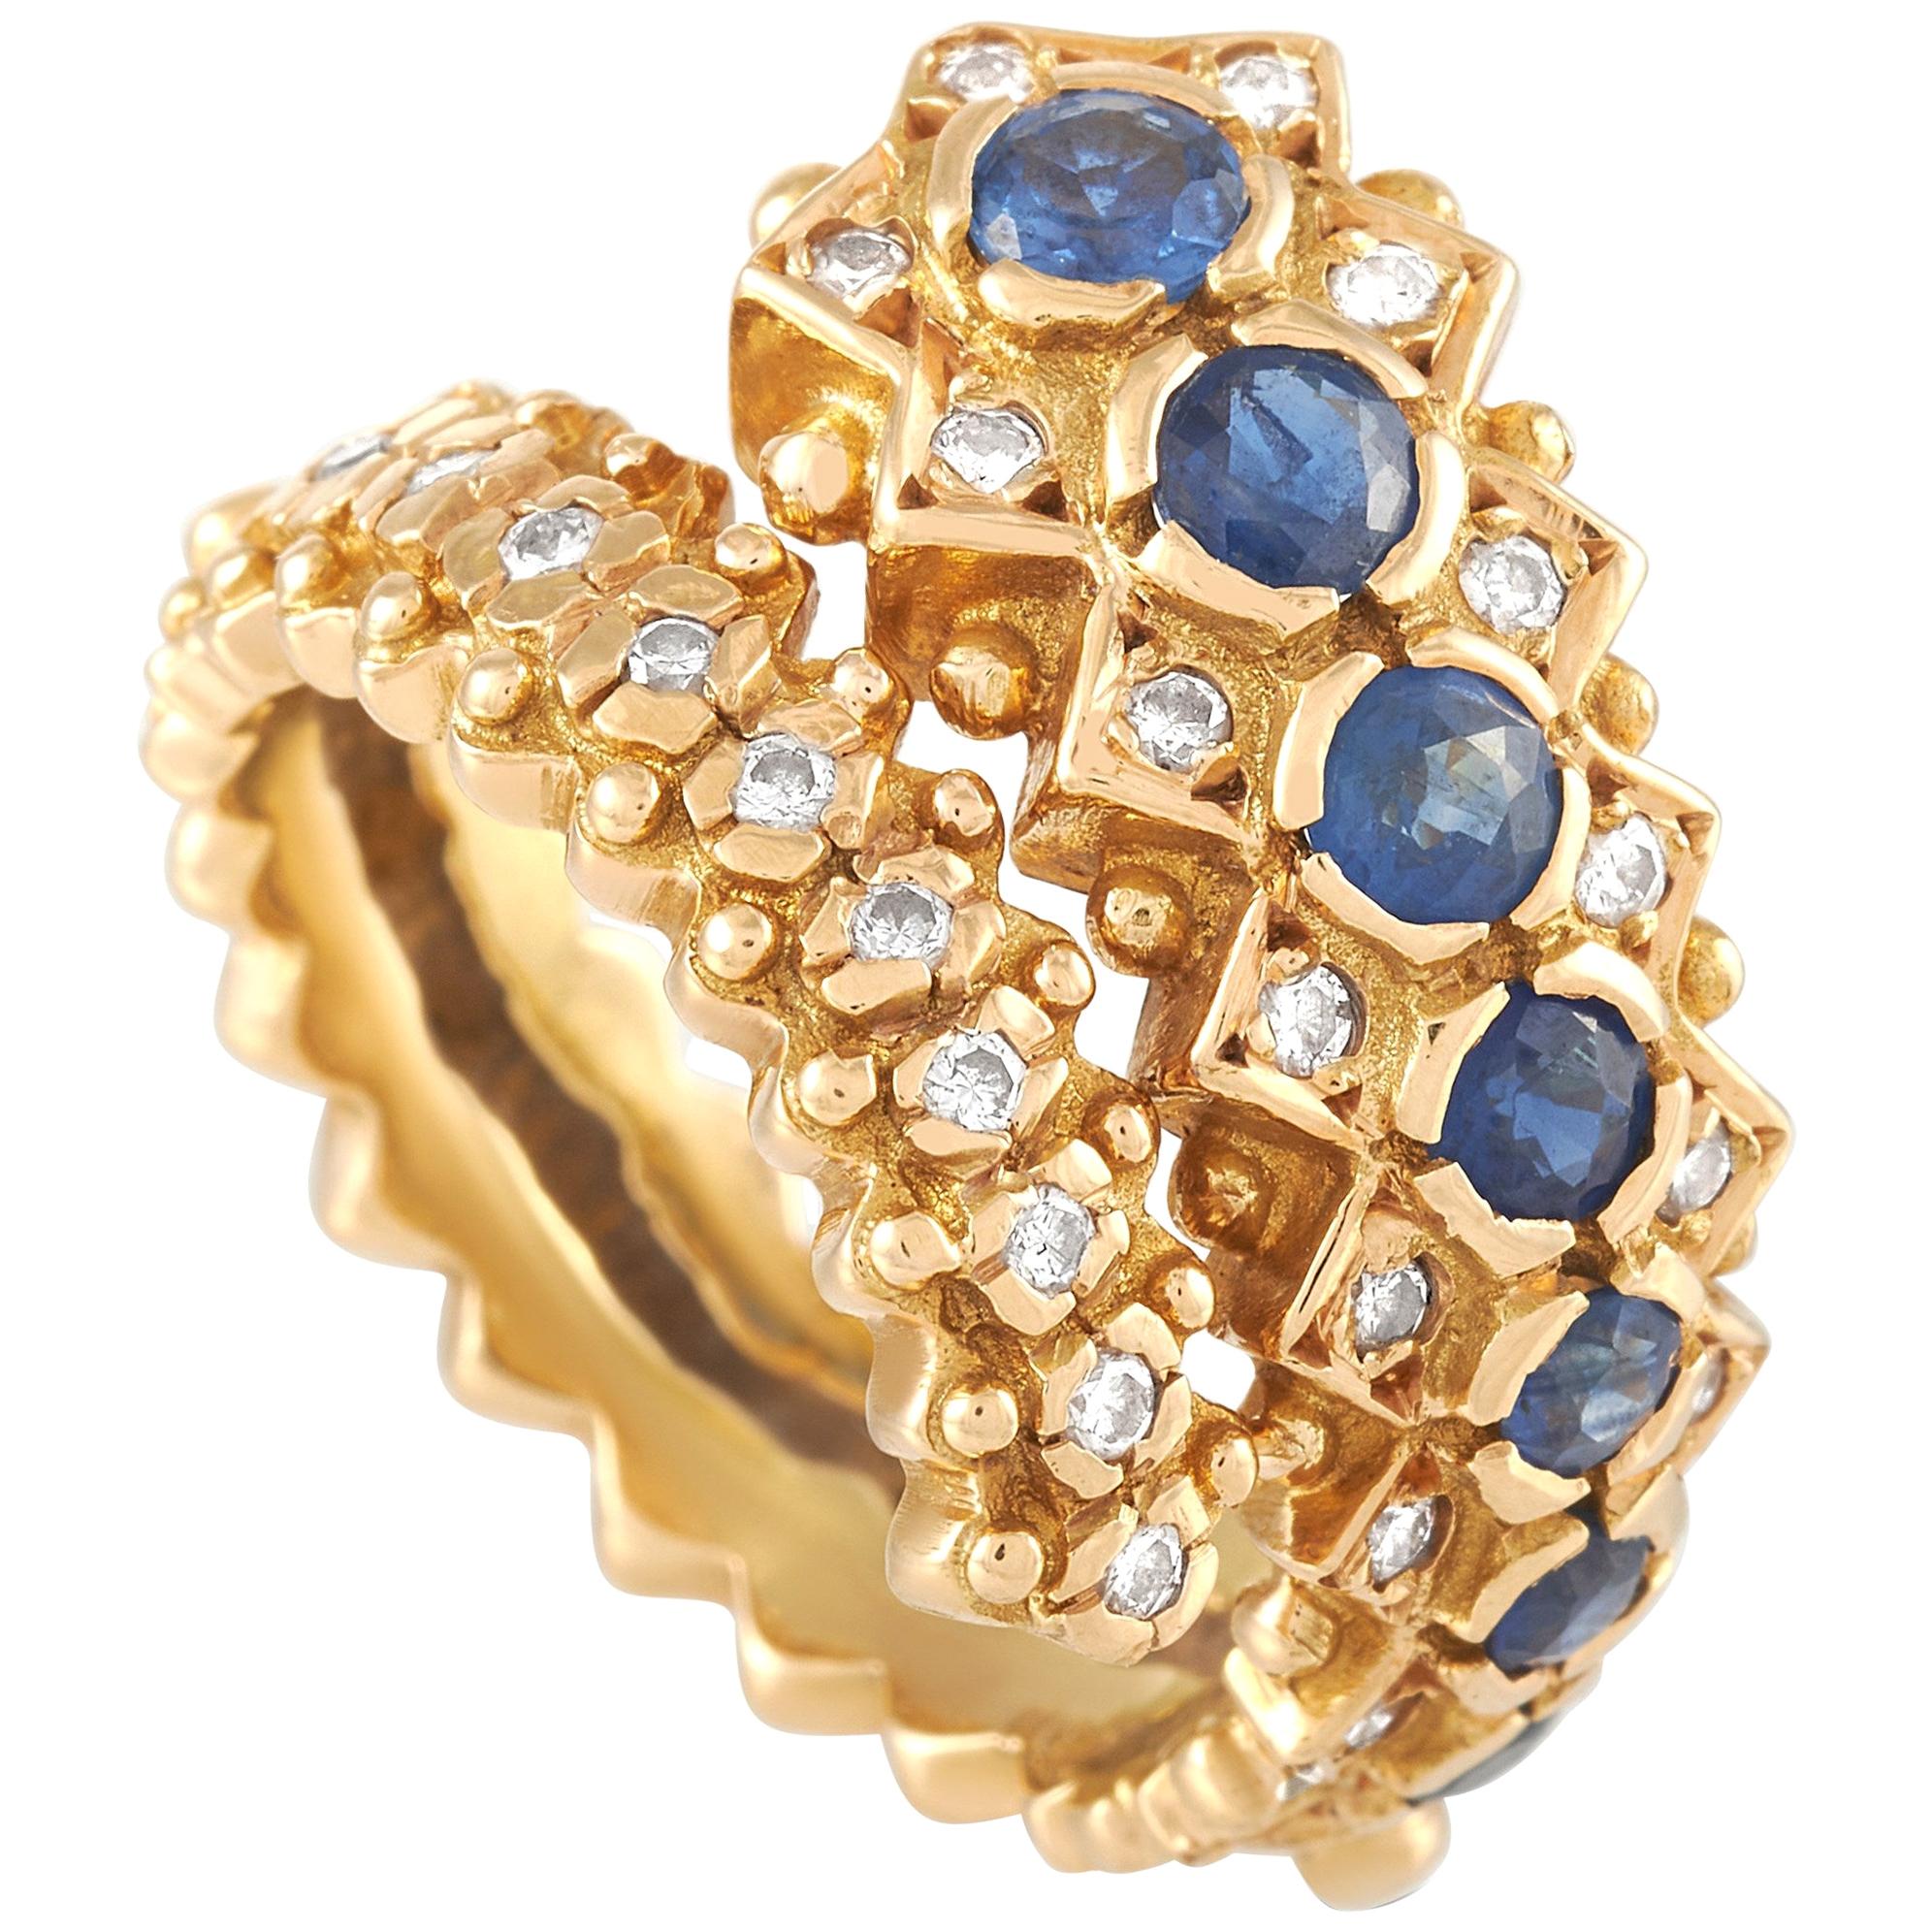 Ilias Lalaounis 18 Karat Yellow Gold Diamond and Sapphire Ring